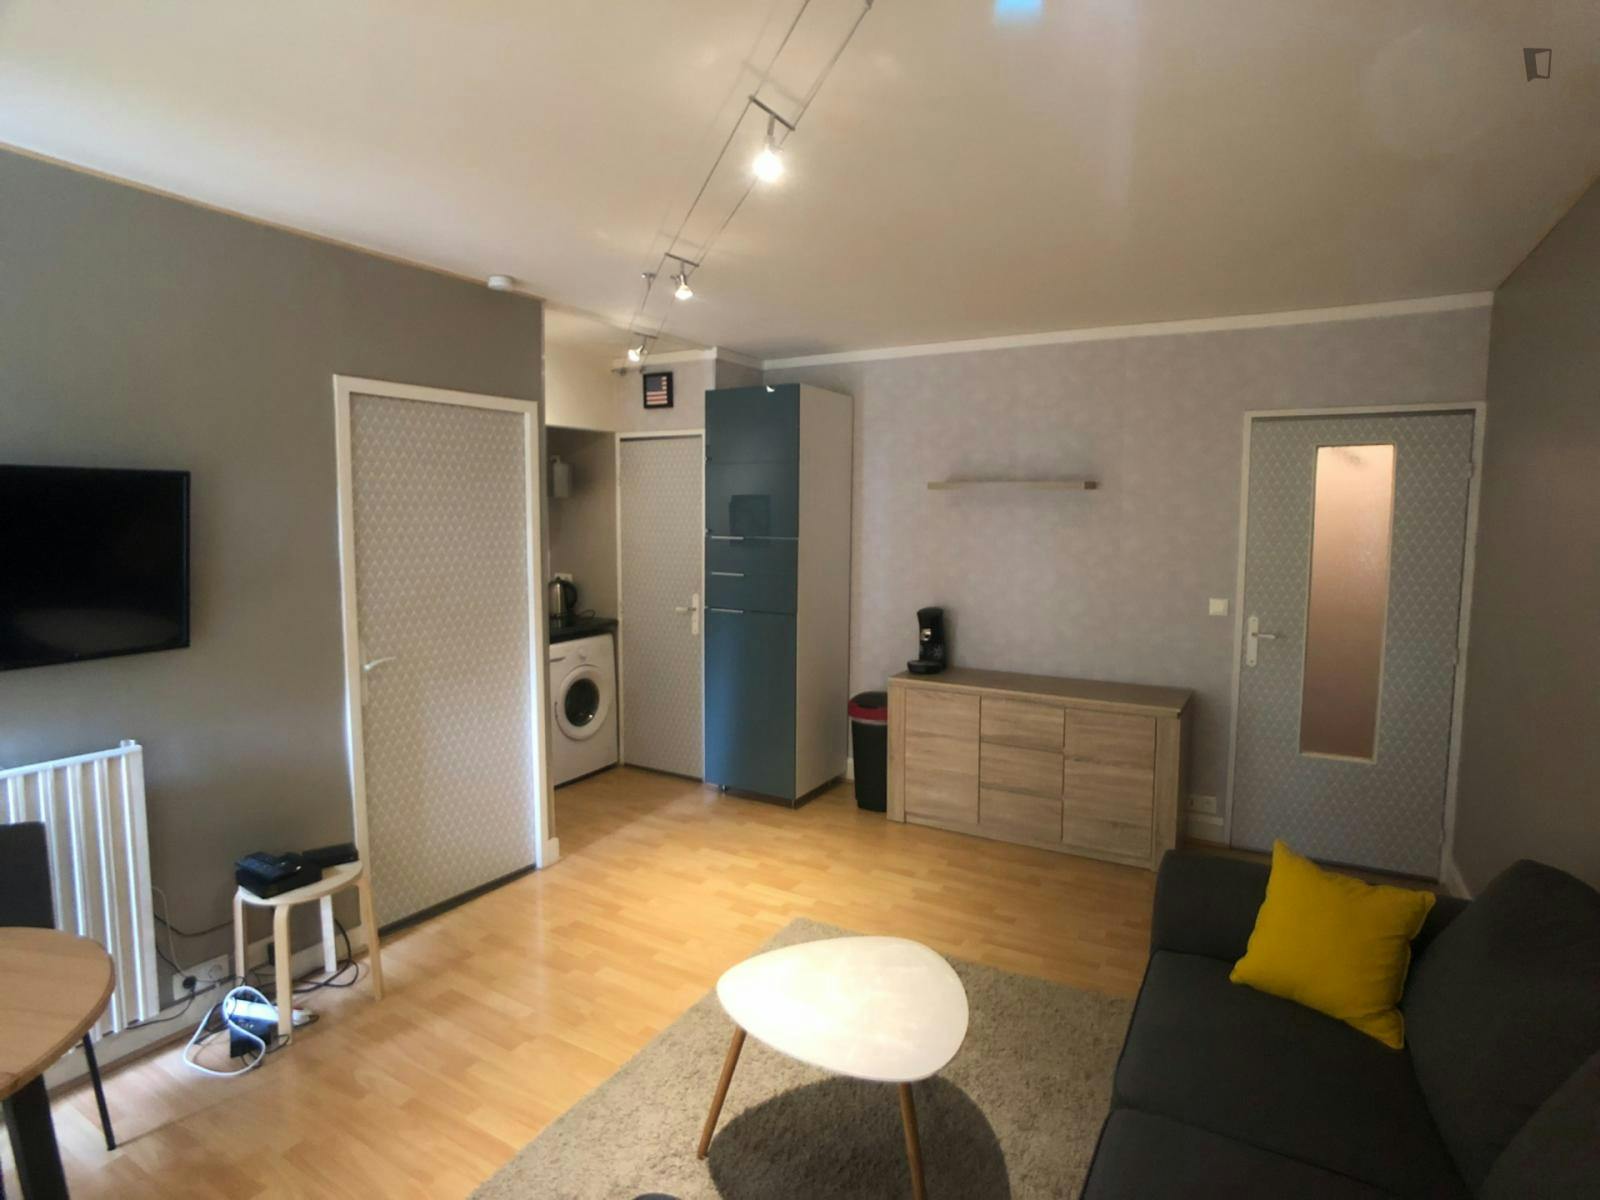 Beautiful 1-bedroom apartment near Gare de Pantin metro station